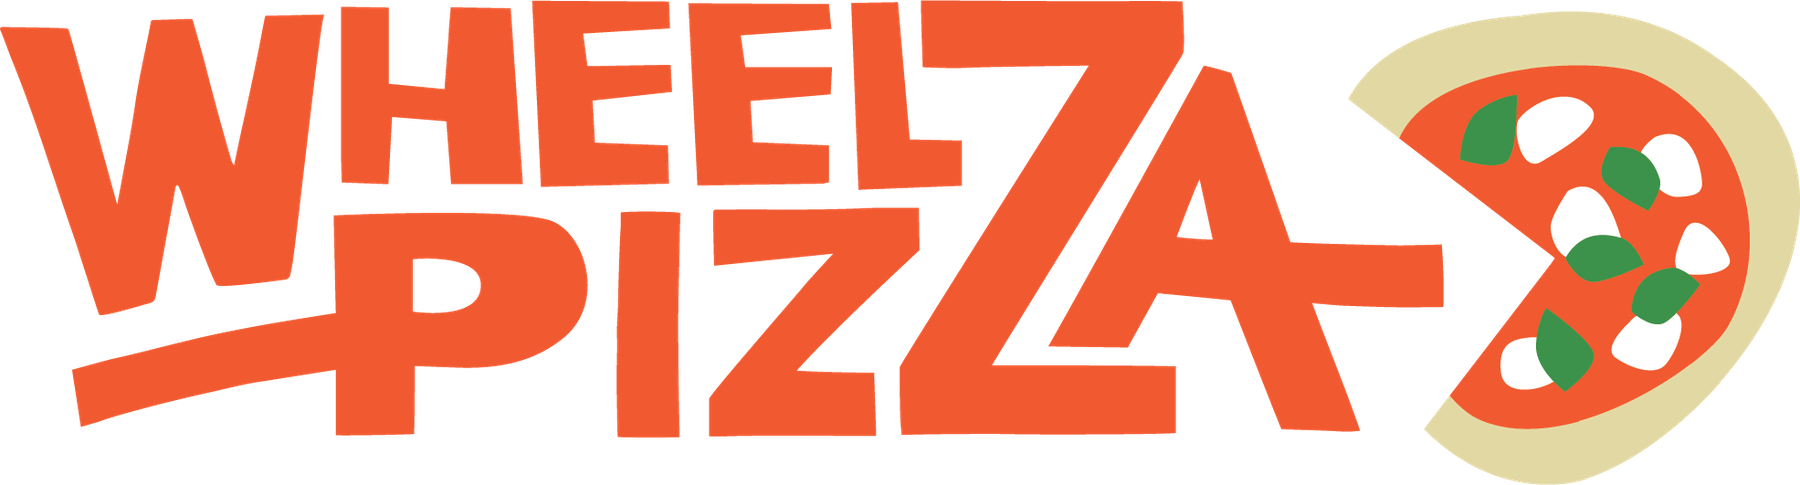 Wheelz Pizza Midtown CLT logo top